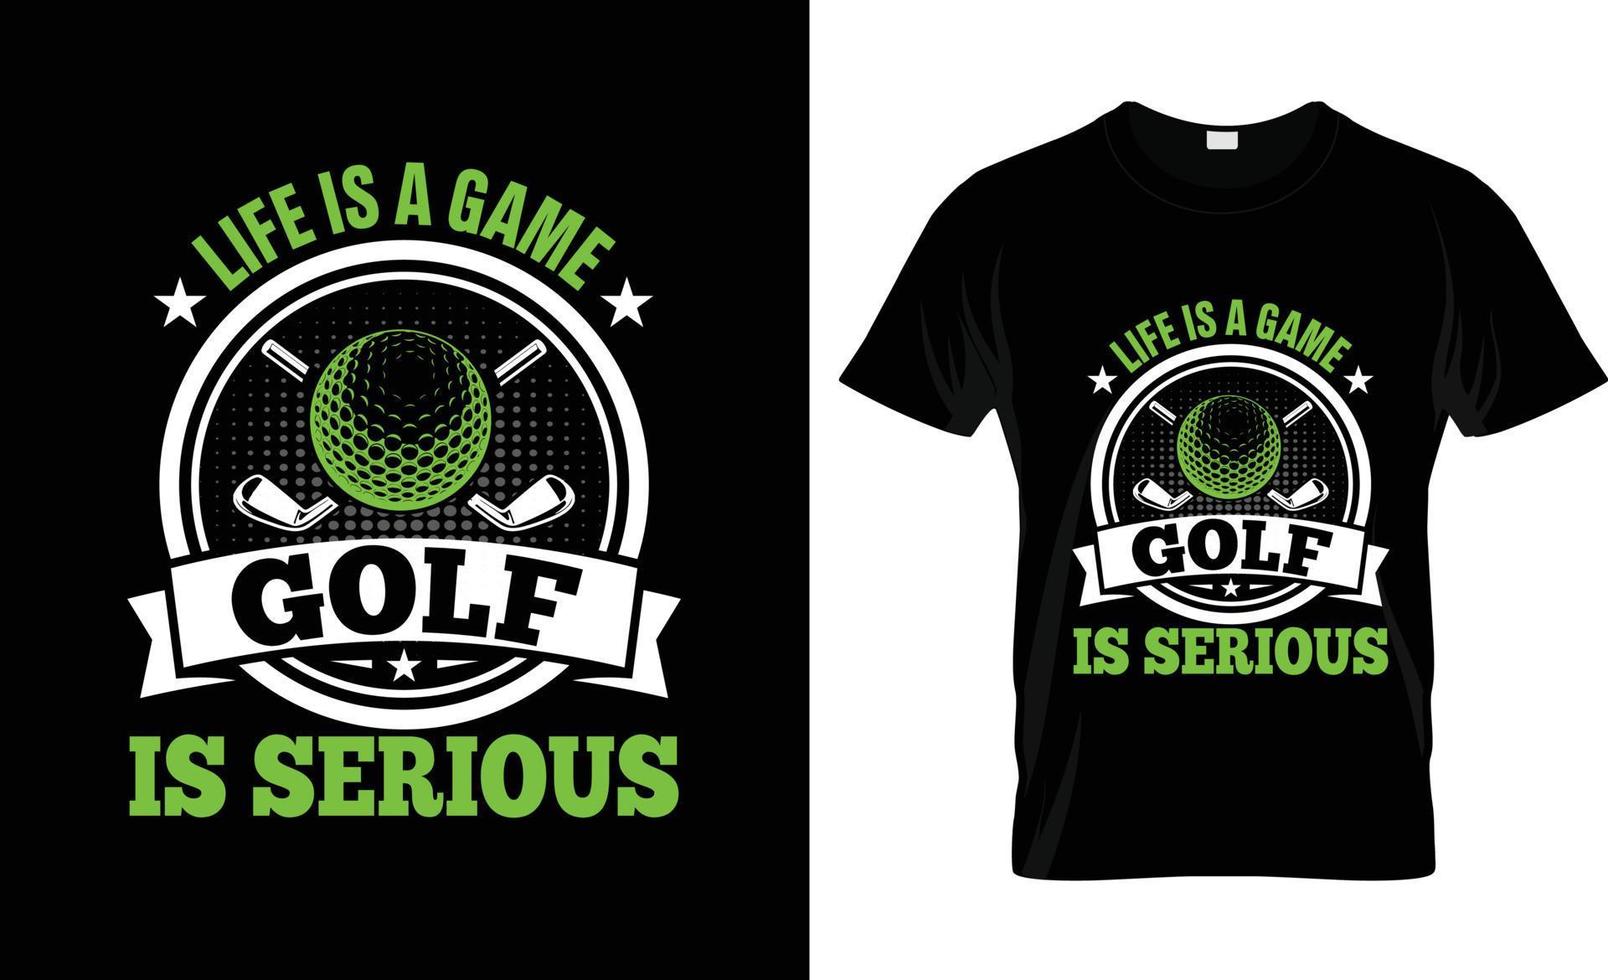 Golf-T-Shirt-Design, Golf-T-Shirt-Slogan und Bekleidungsdesign, Golftypografie, Golfvektor, Golfillustration vektor